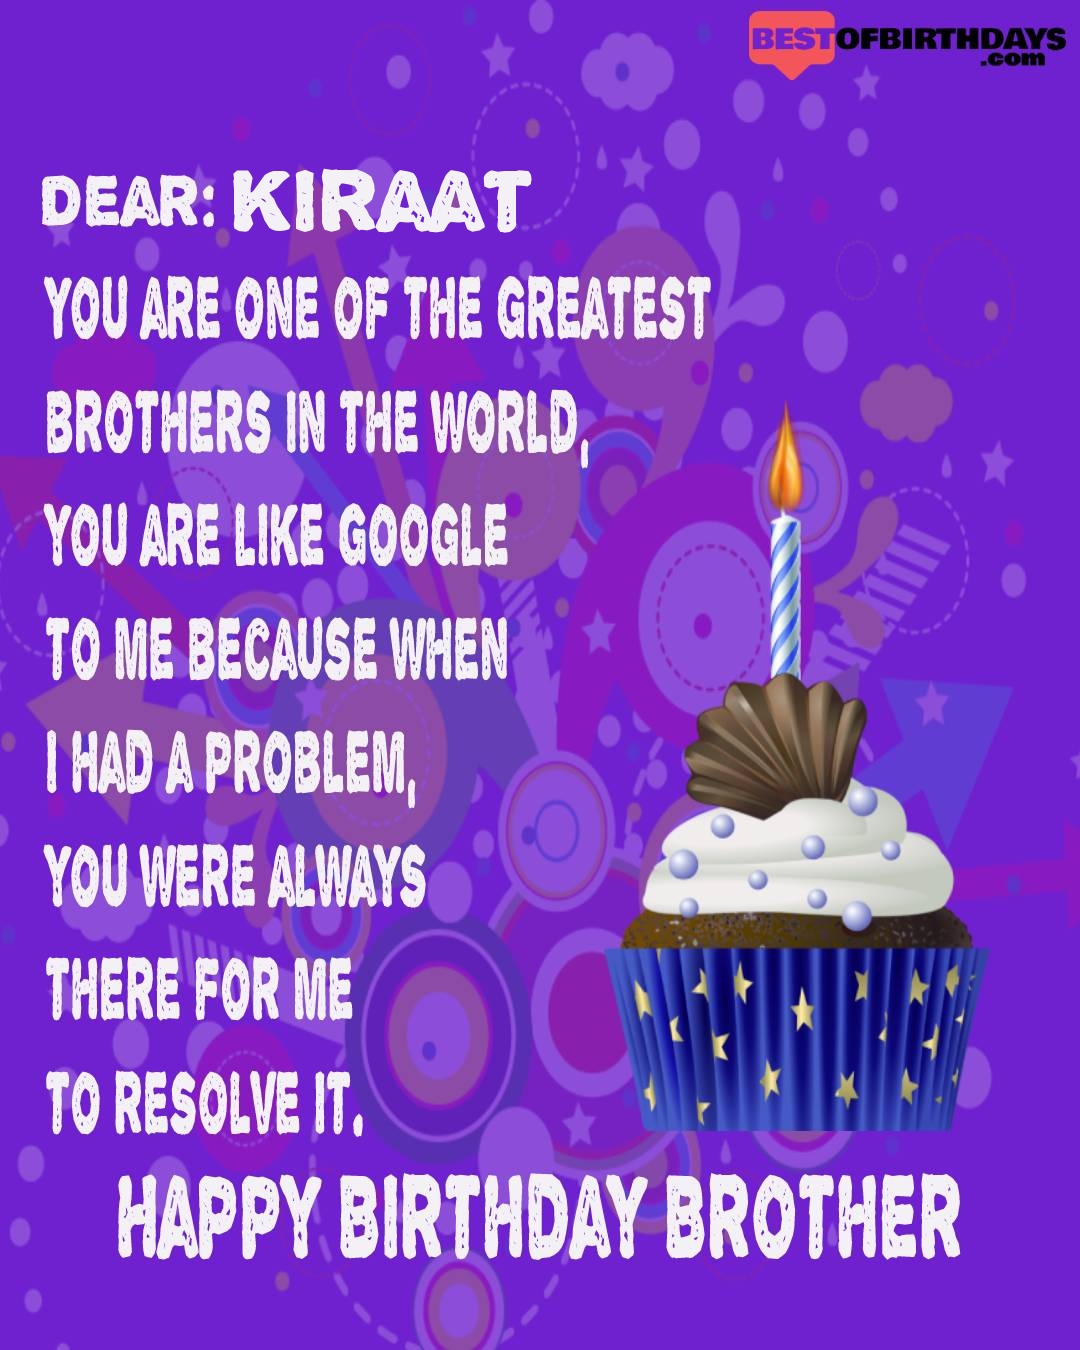 Happy birthday kiraat bhai brother bro